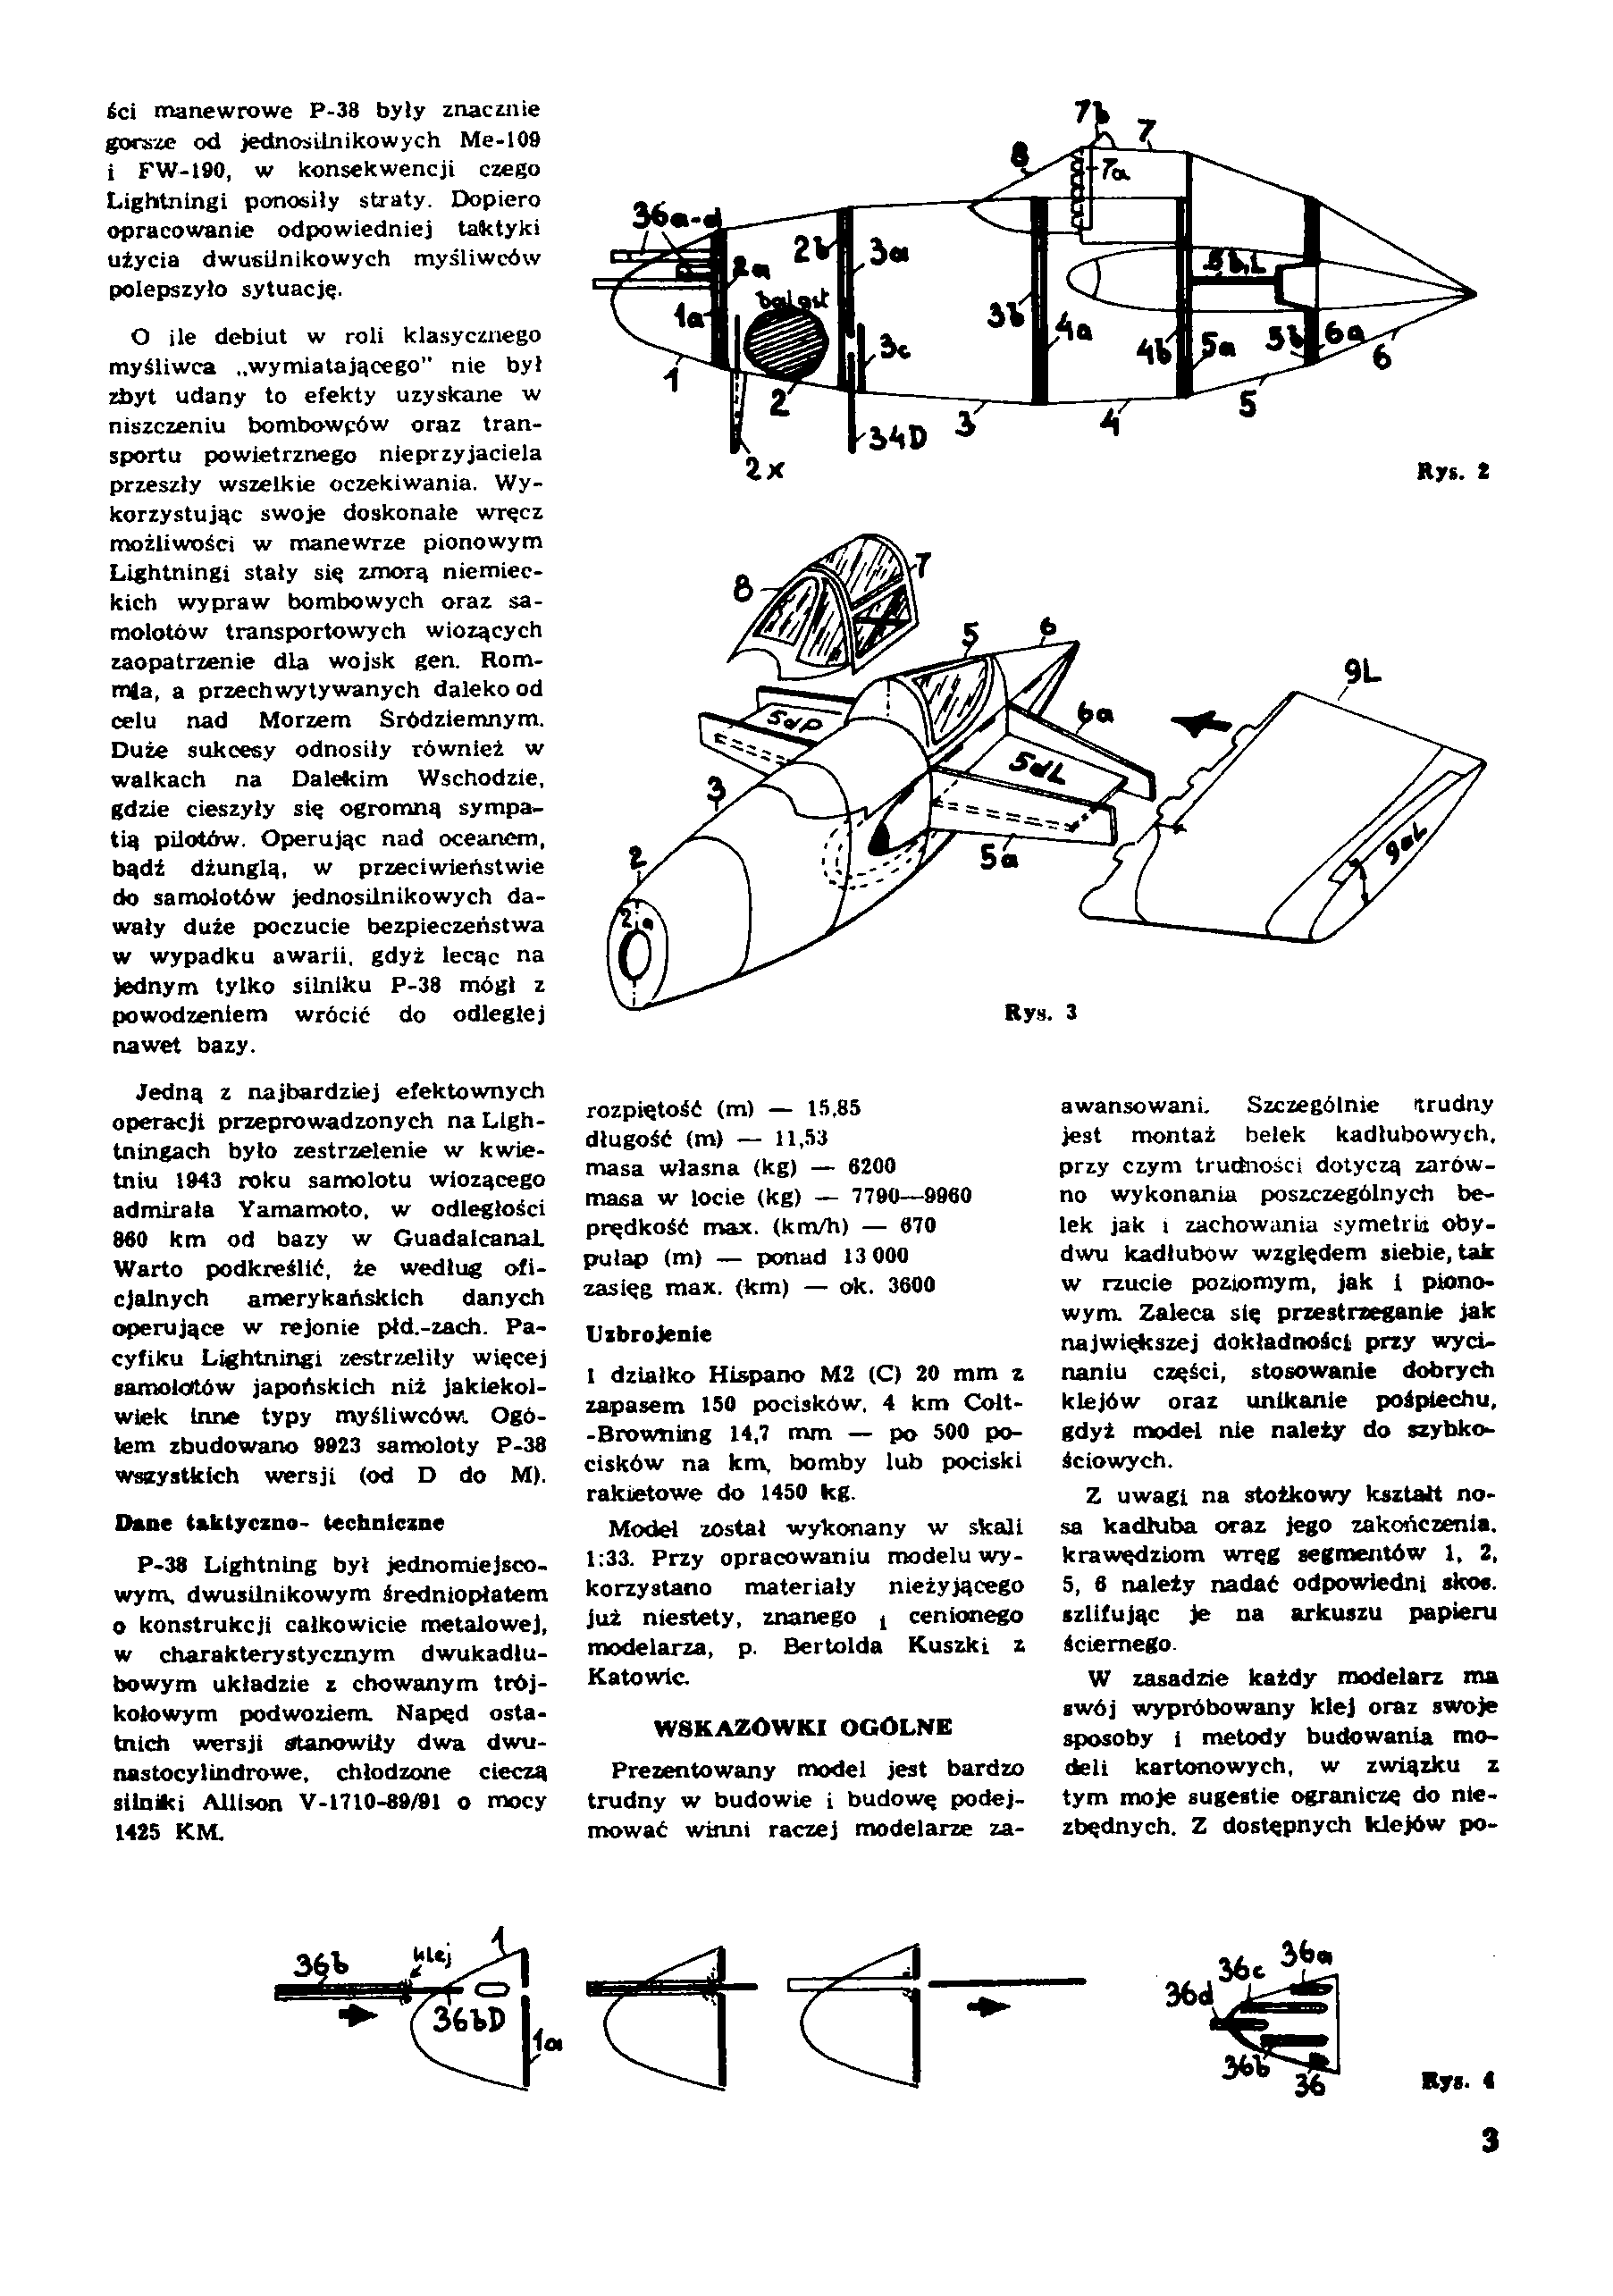 "Maly Modelarz" 10-11, 1987, 3 с.